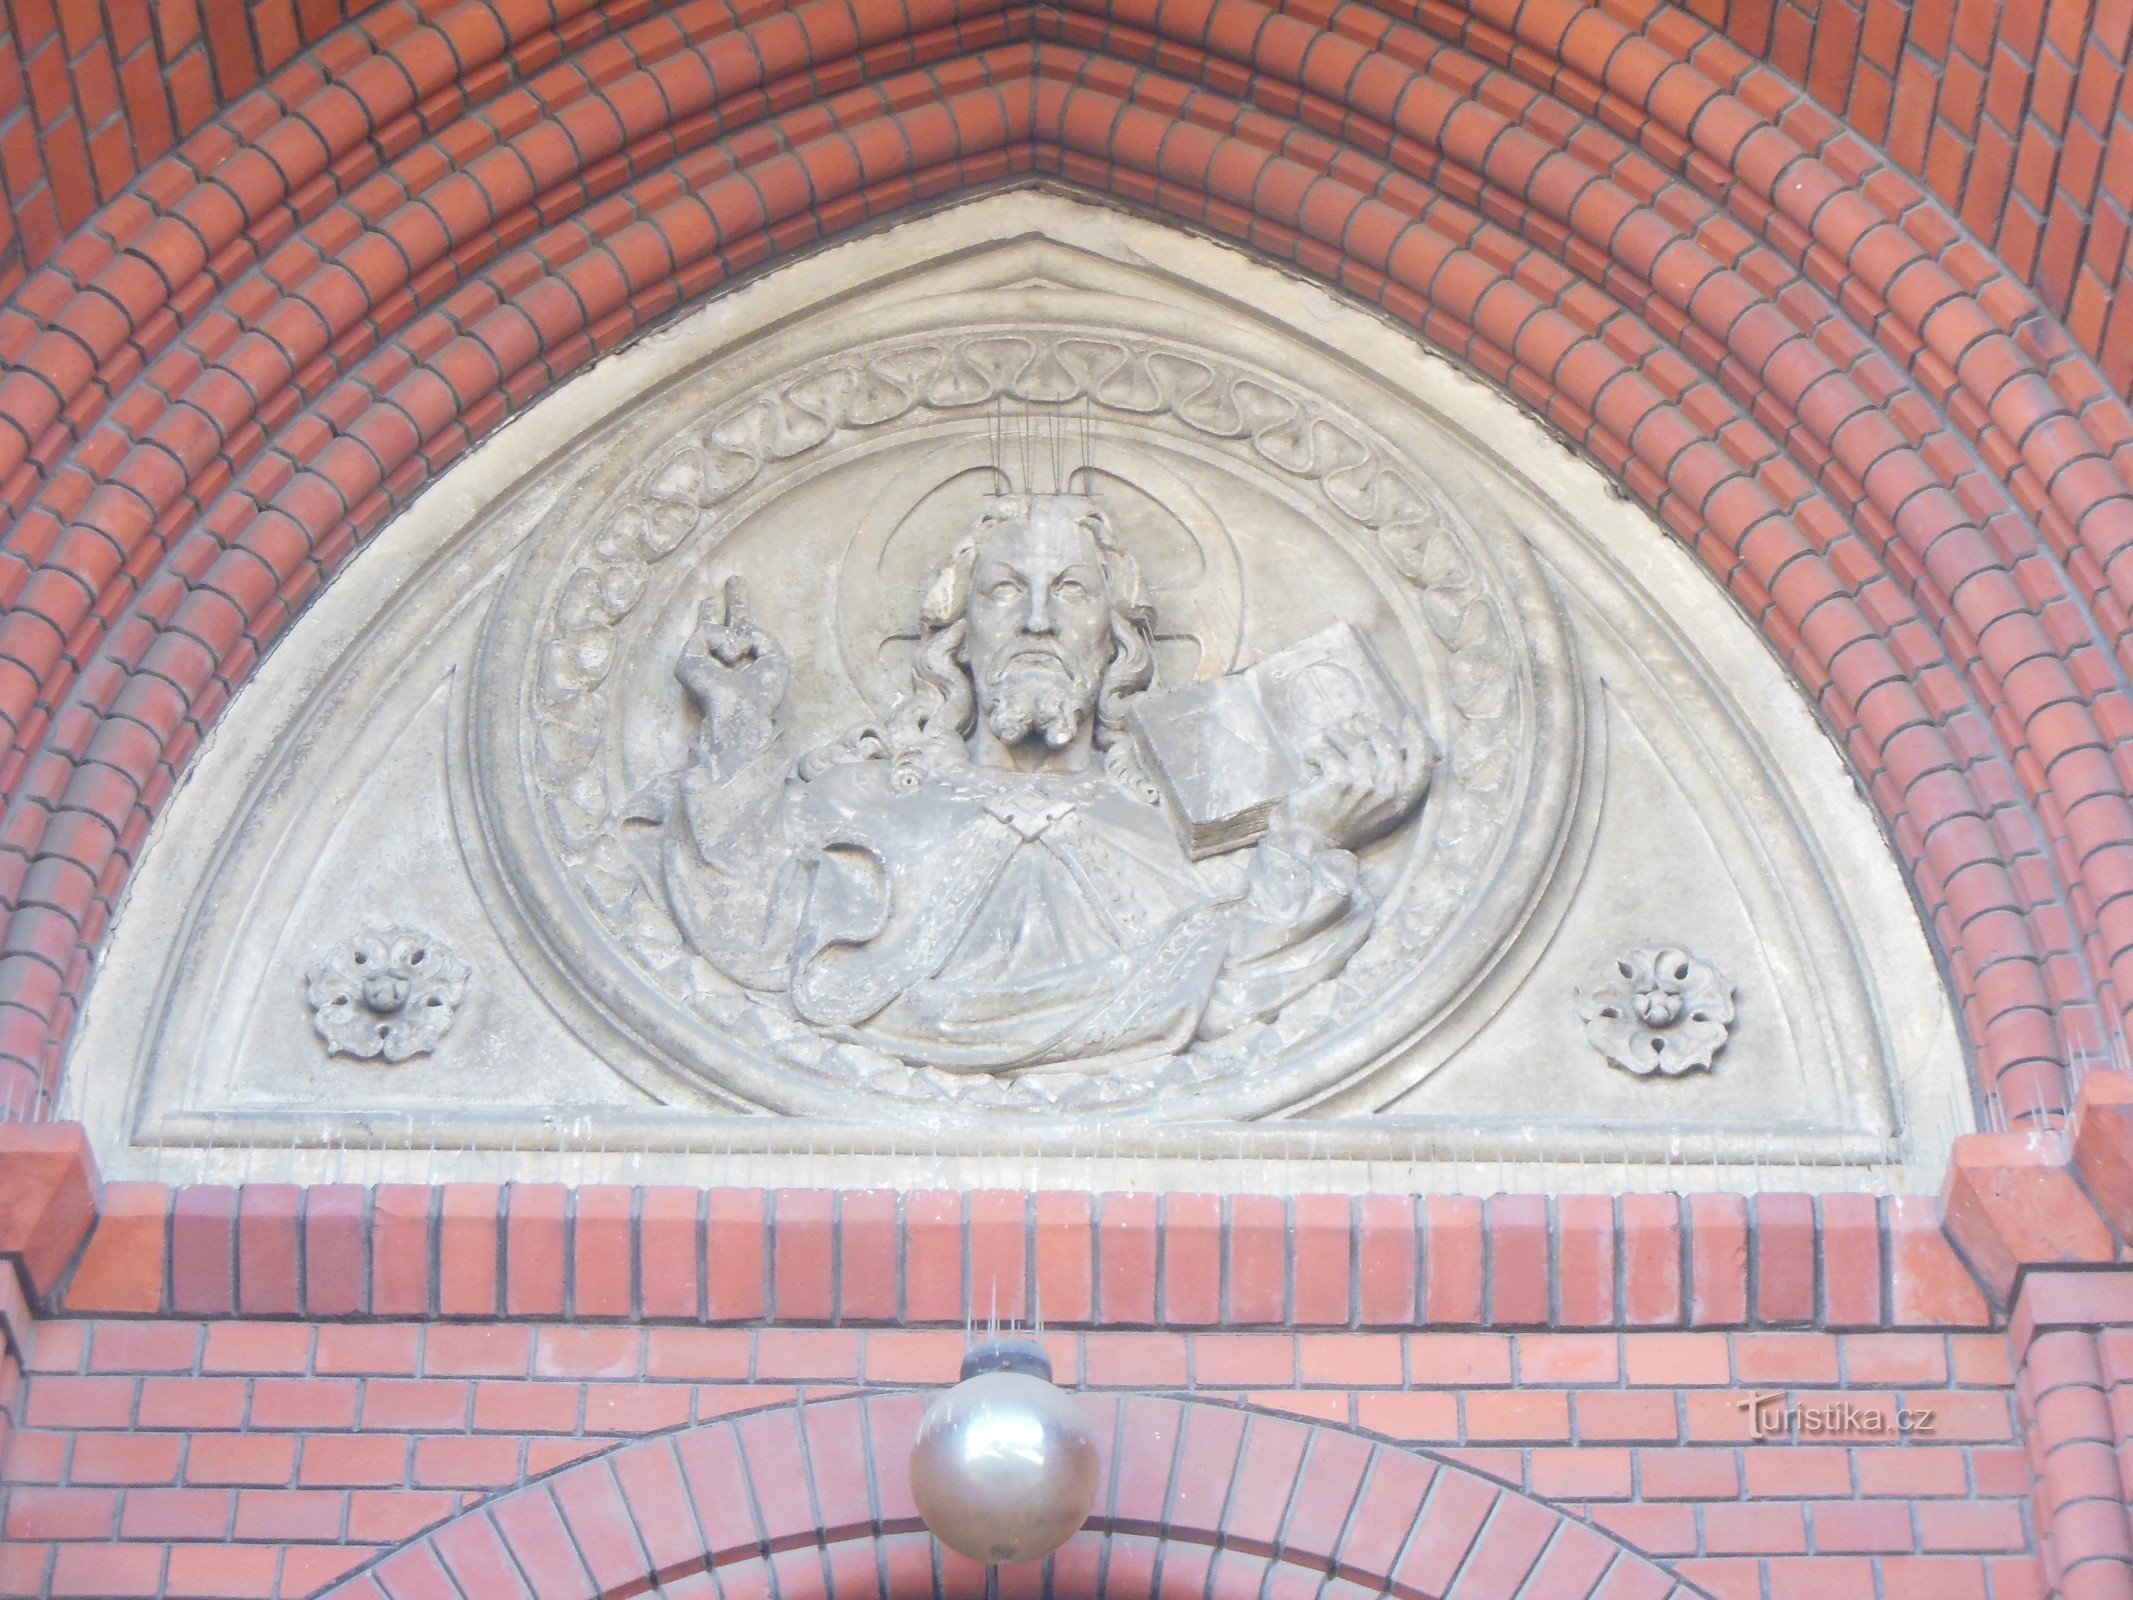 sculpture above the entrance